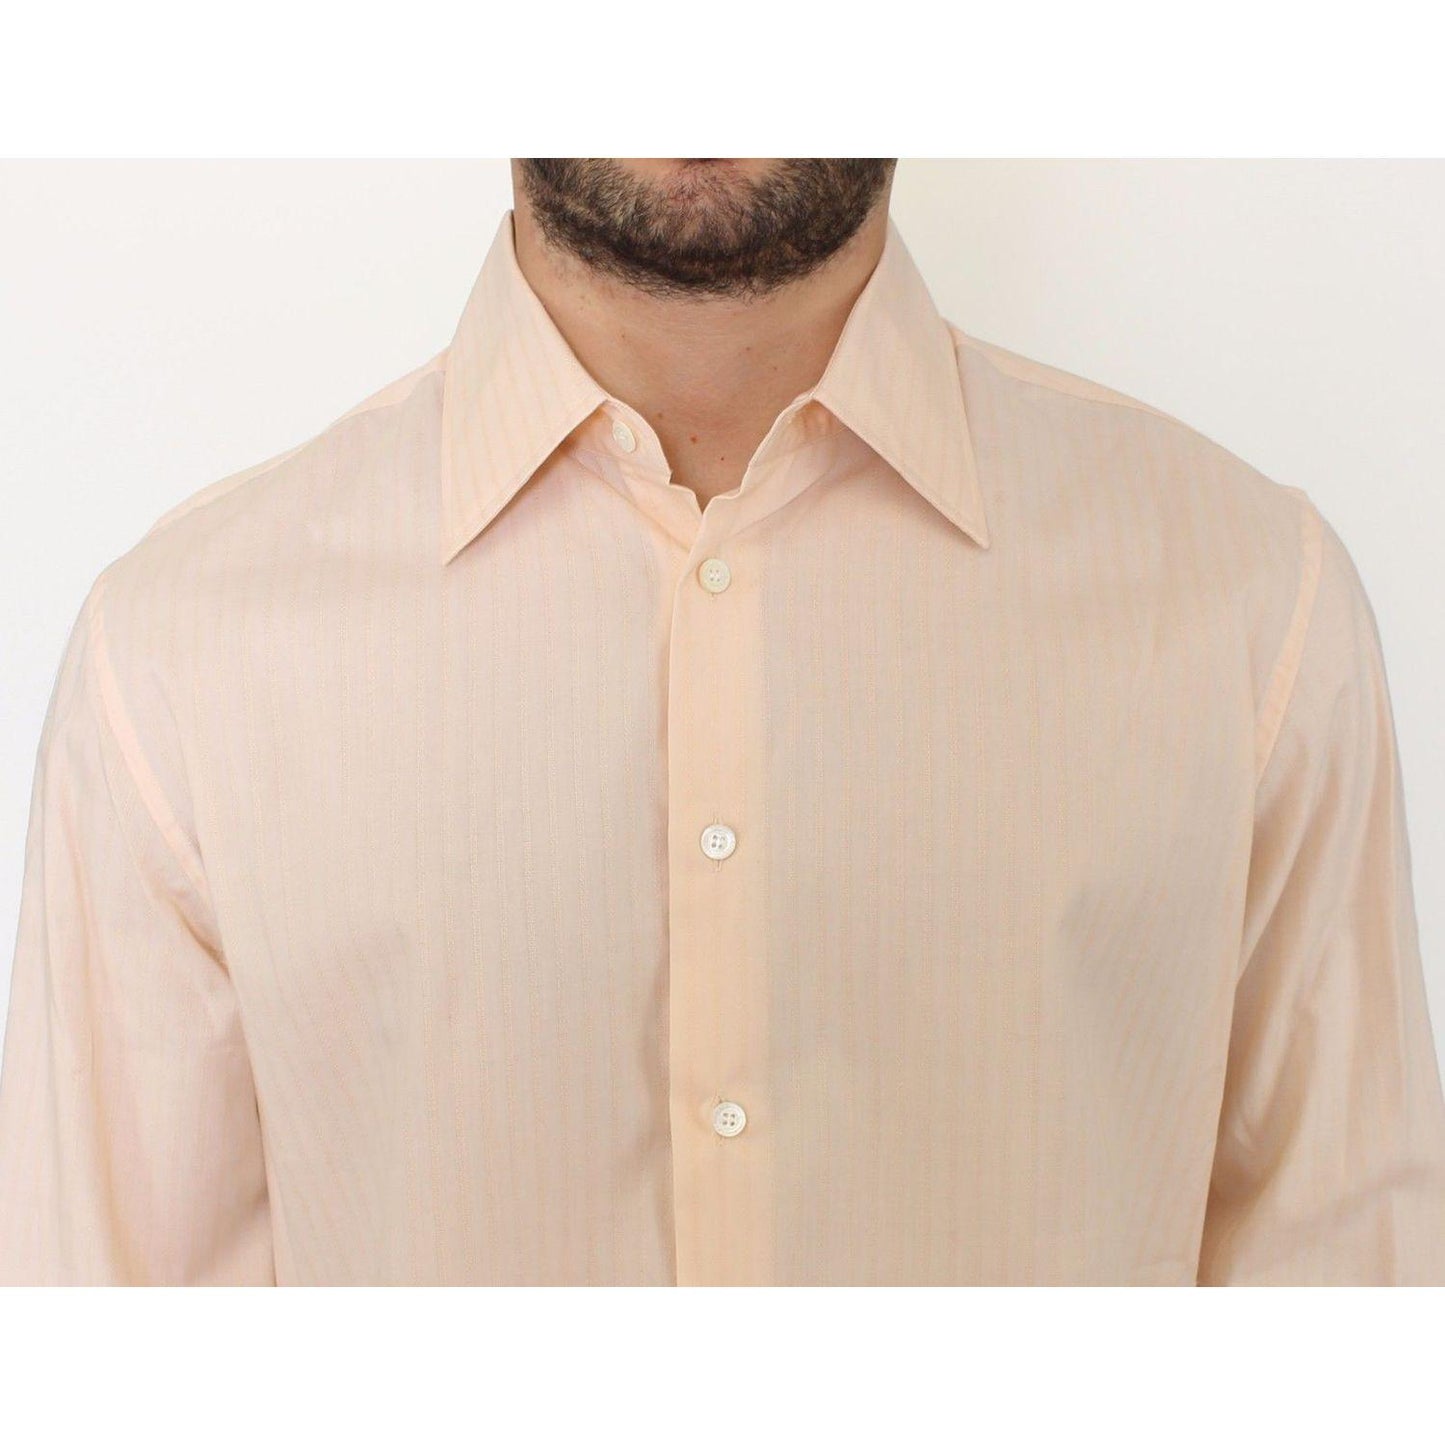 Ermanno Scervino Sunset Hues Striped Cotton Shirt orange-cotton-striped-casual-shirt-top